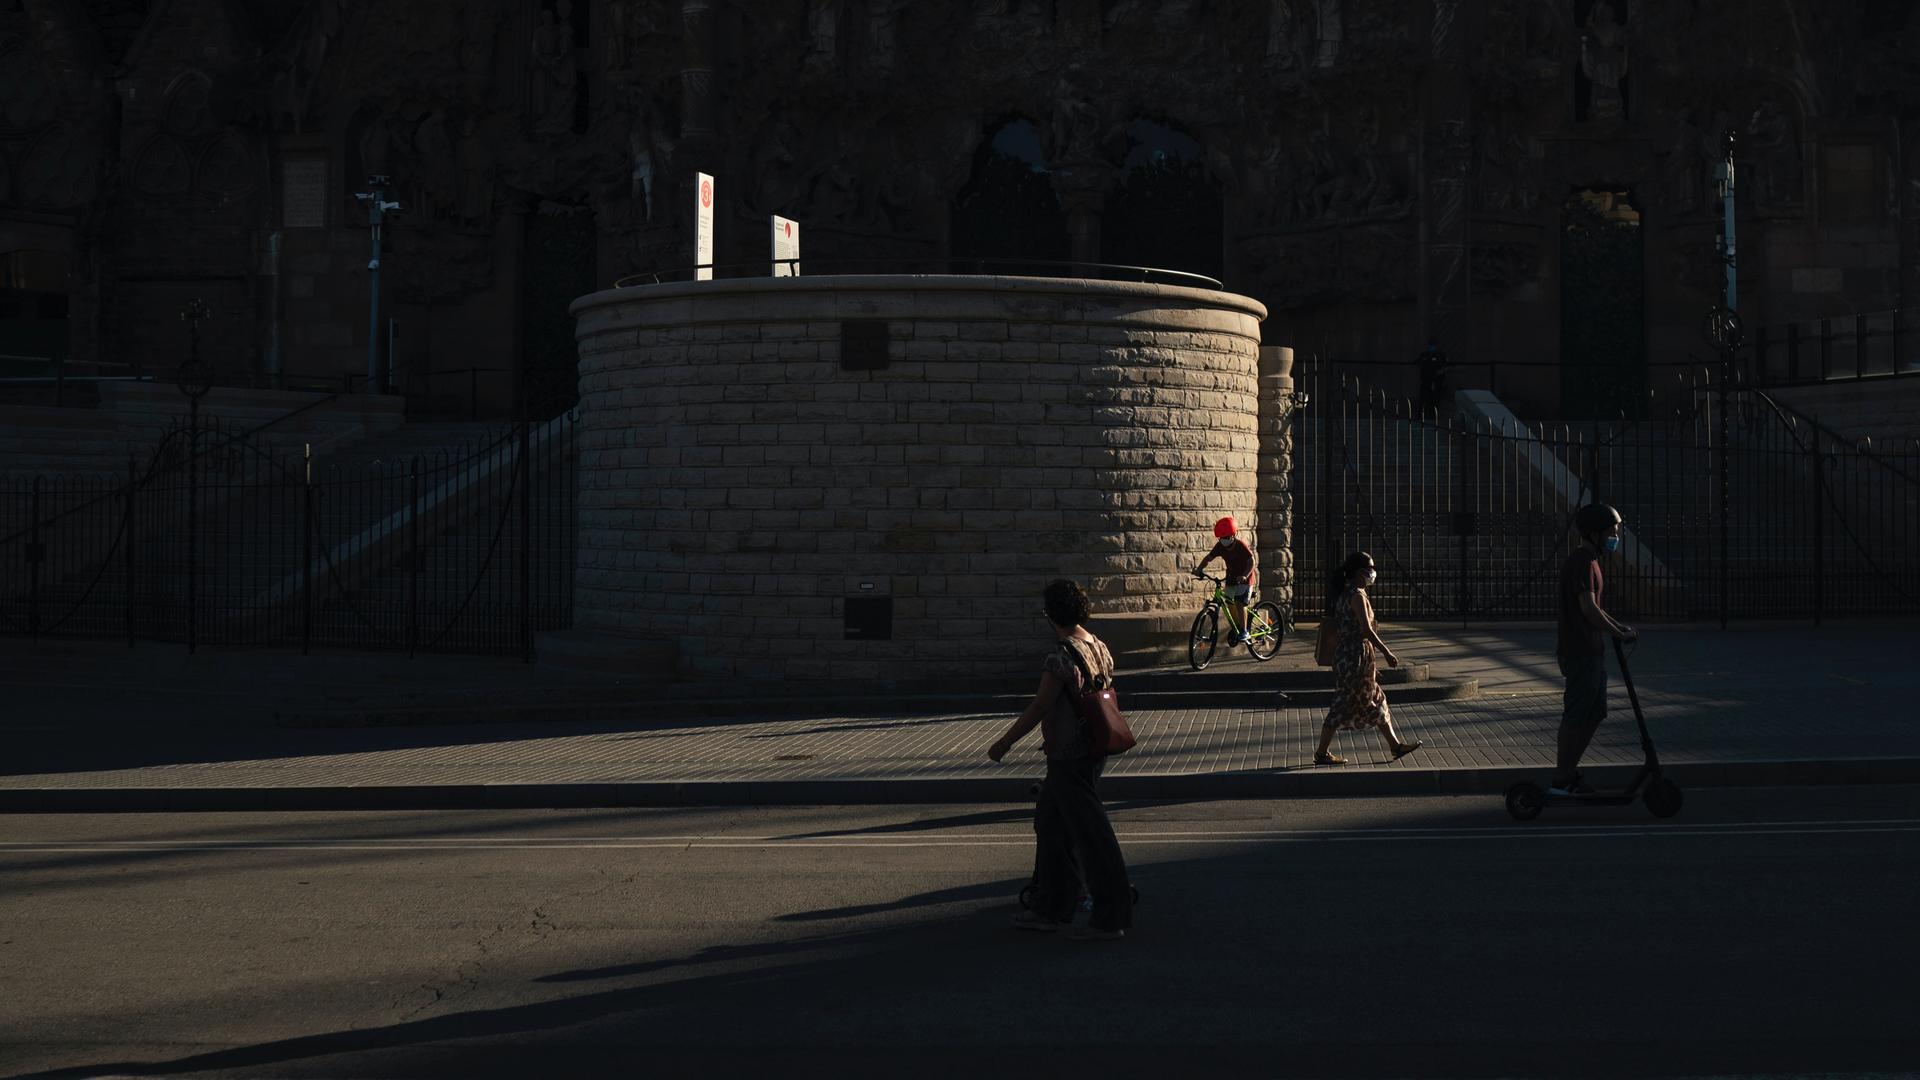 A few people walk or bike in shadows near a large building. 